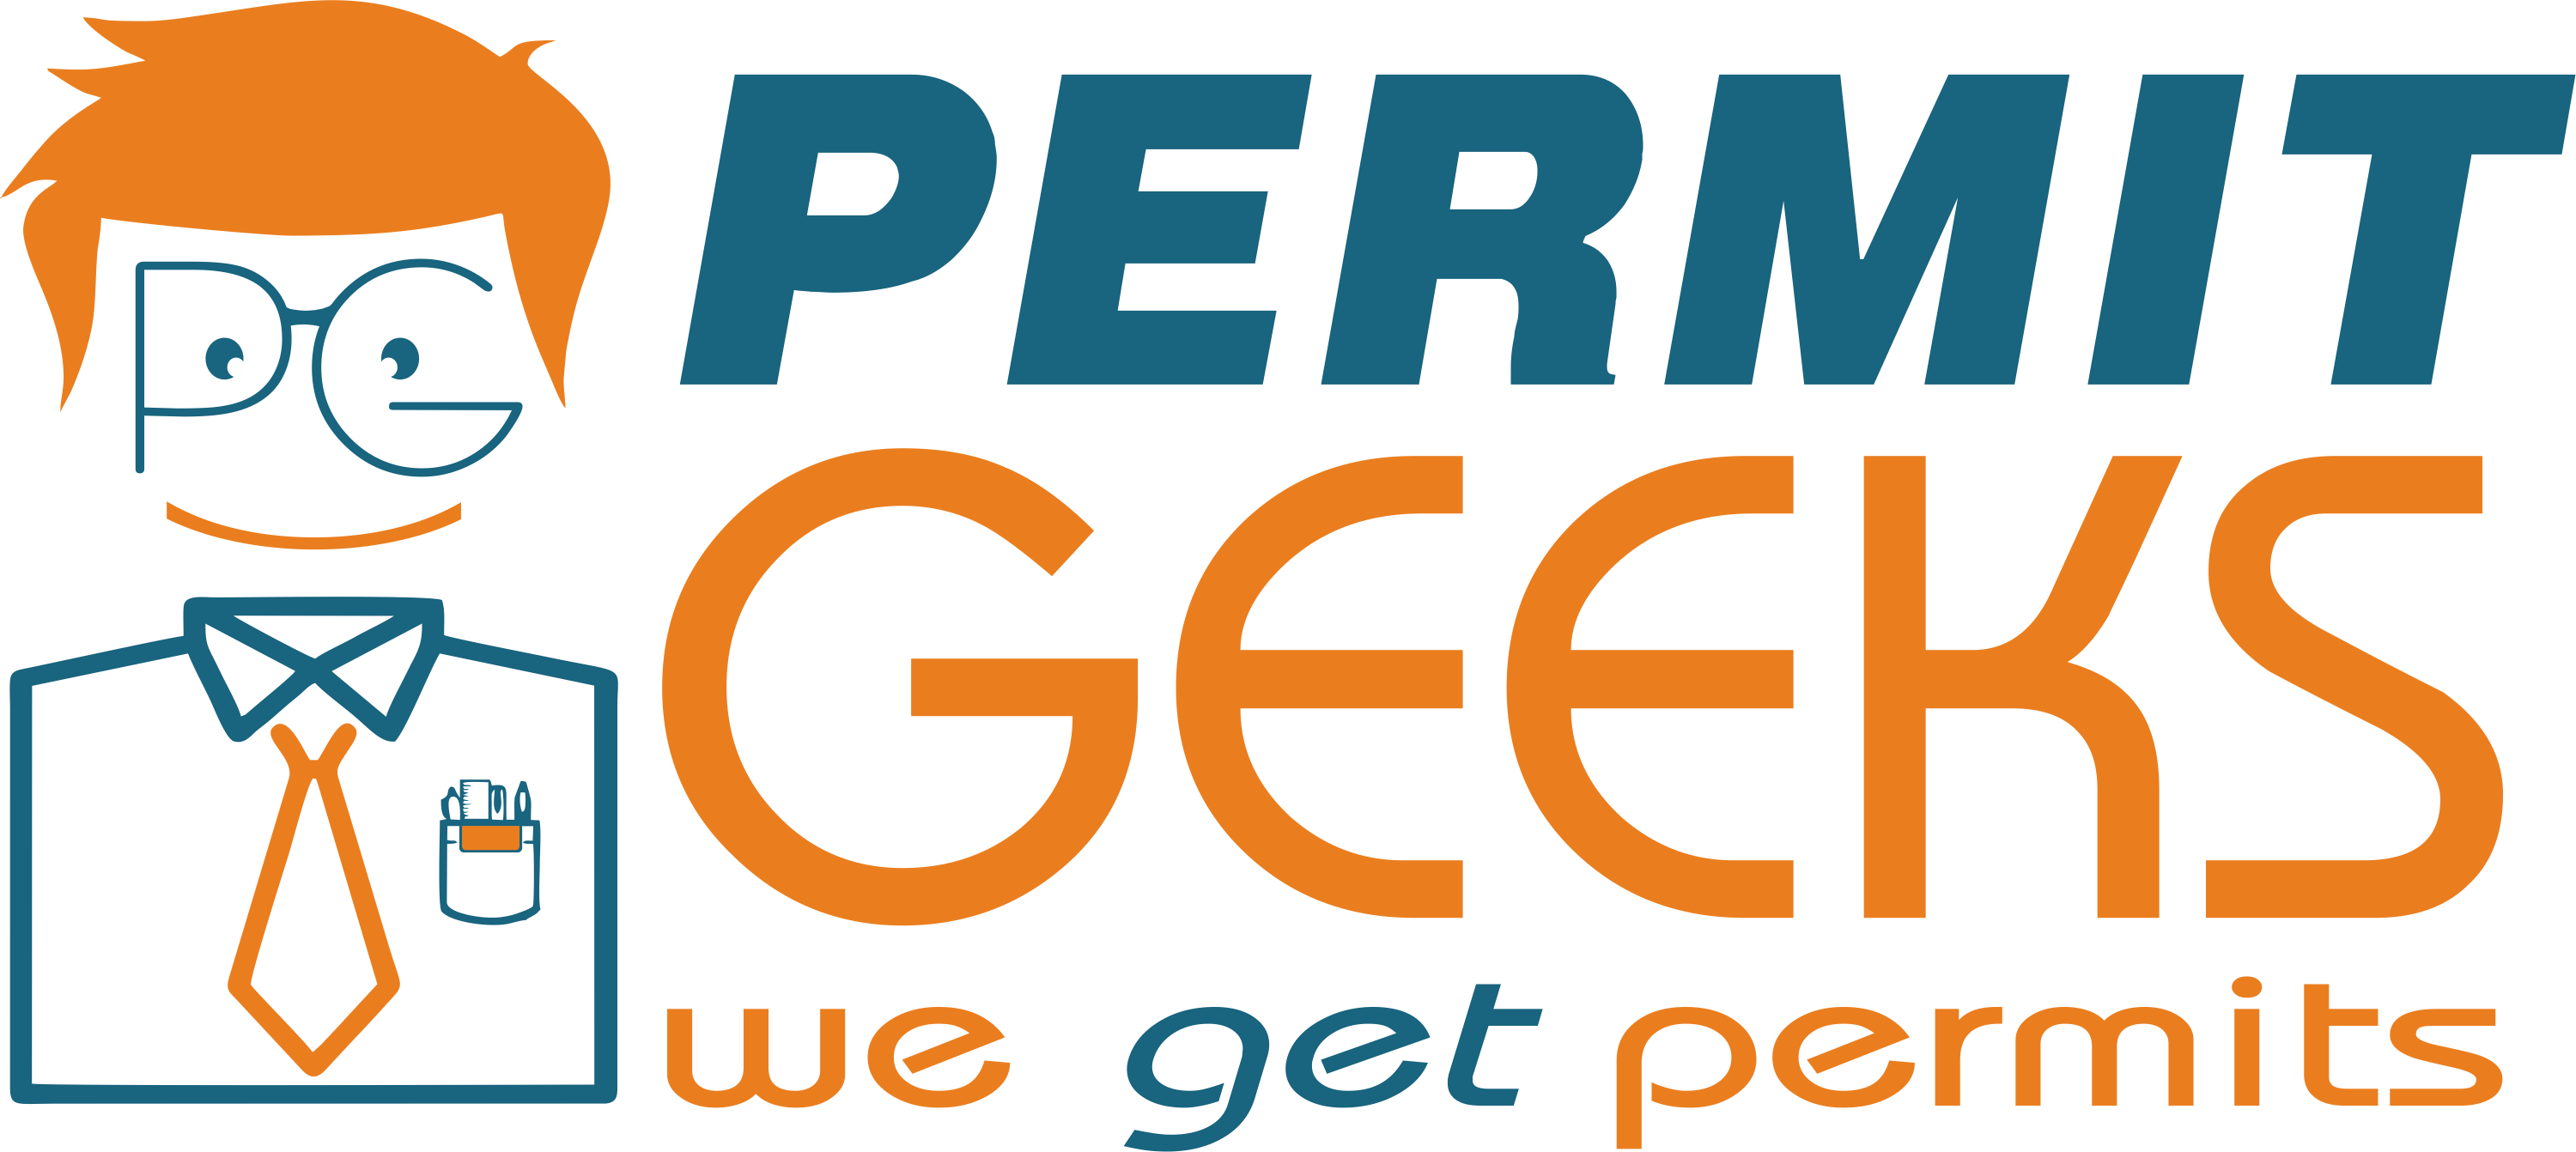 Permit Geeks